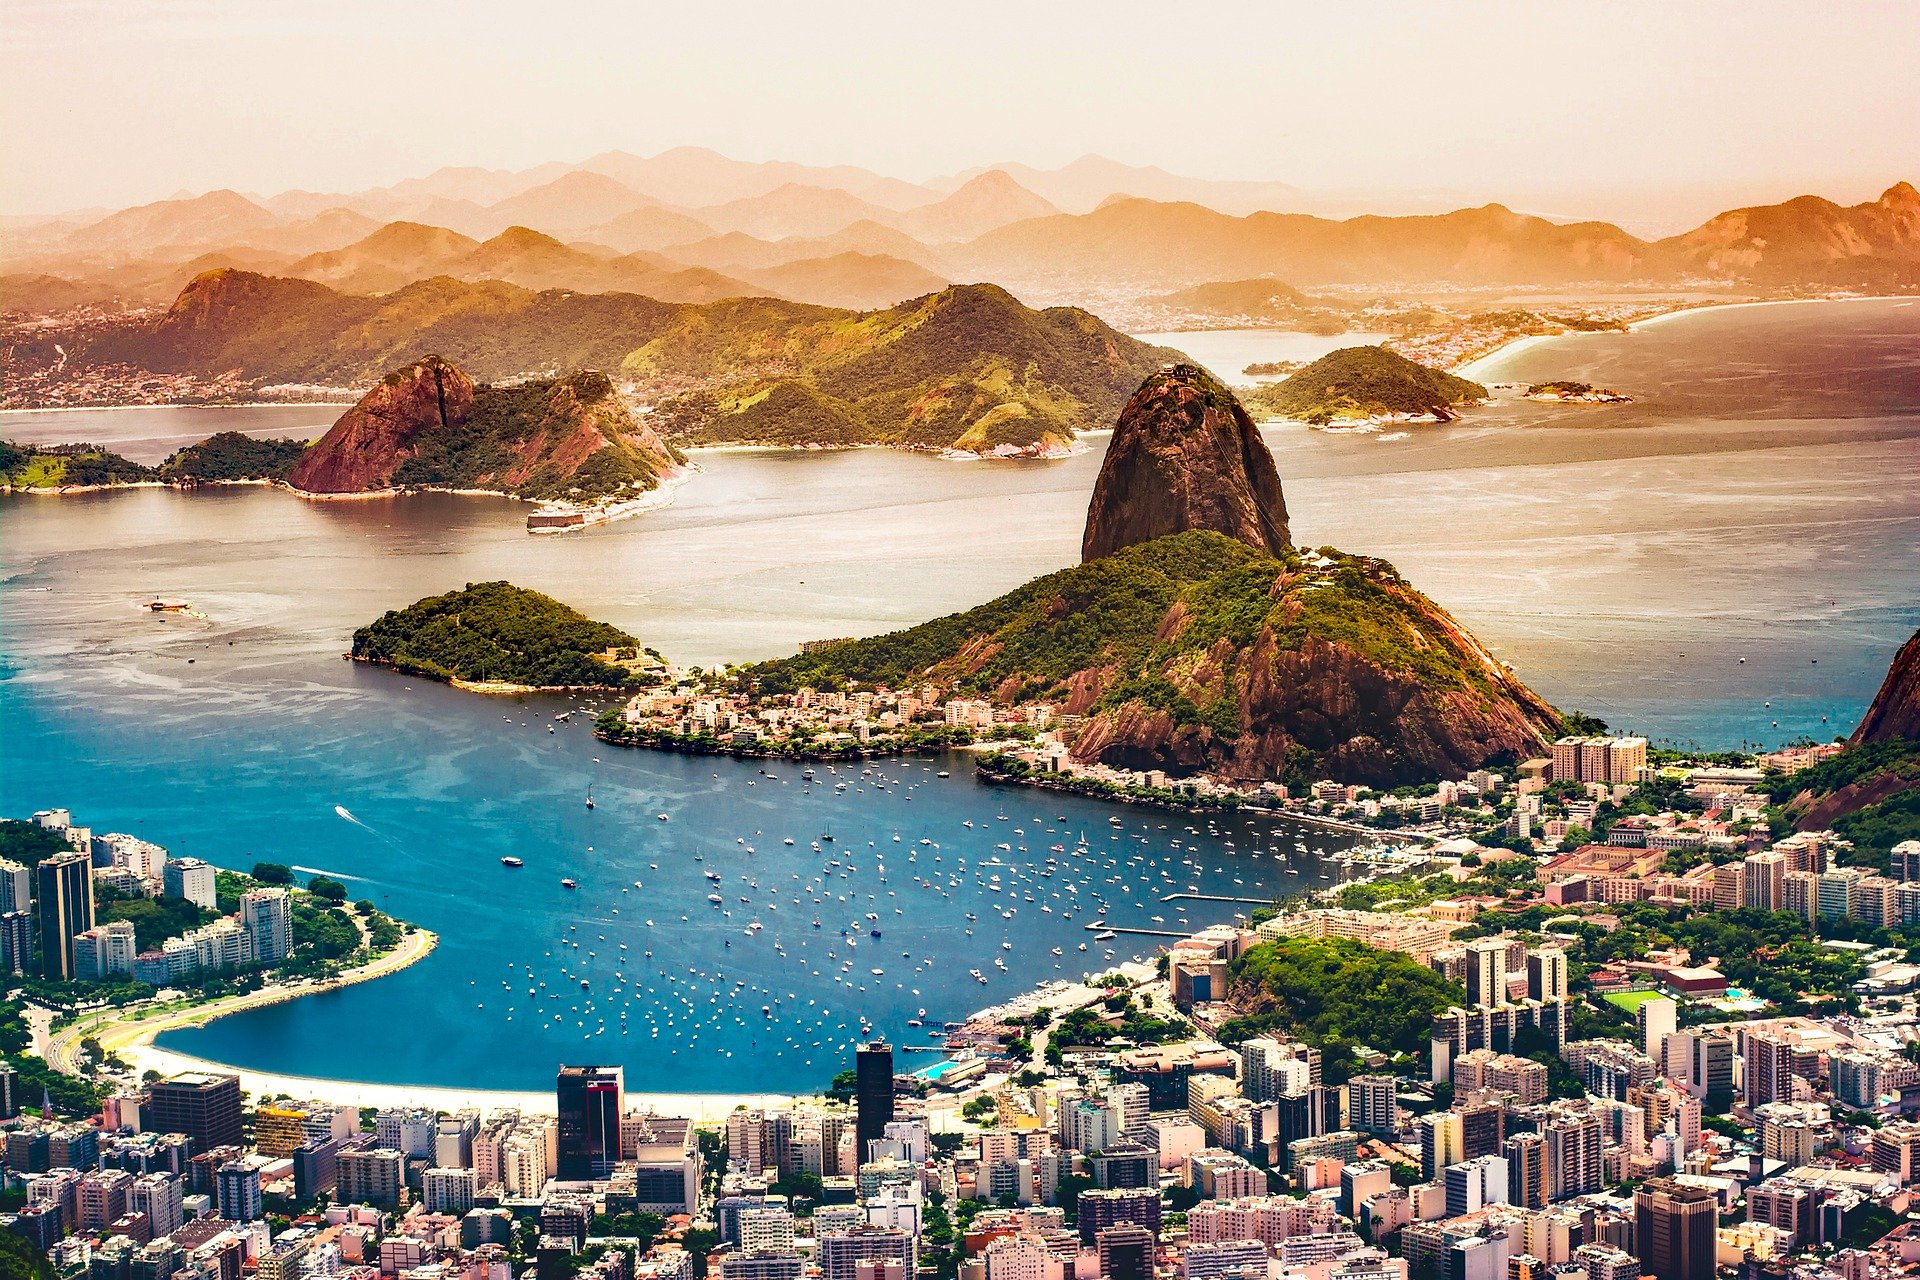 Travel to Rio de Janeiro in style with Paramount Cruises